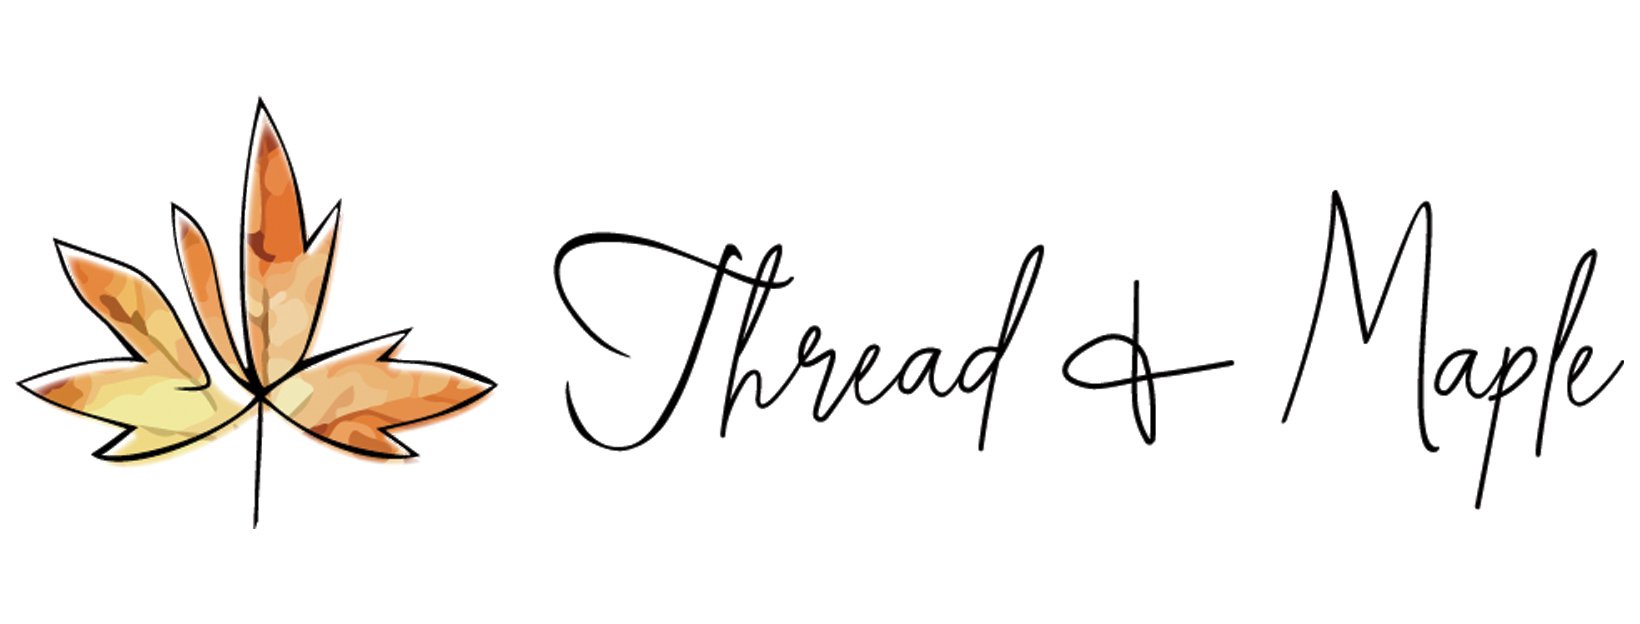 Thread and Maple logo